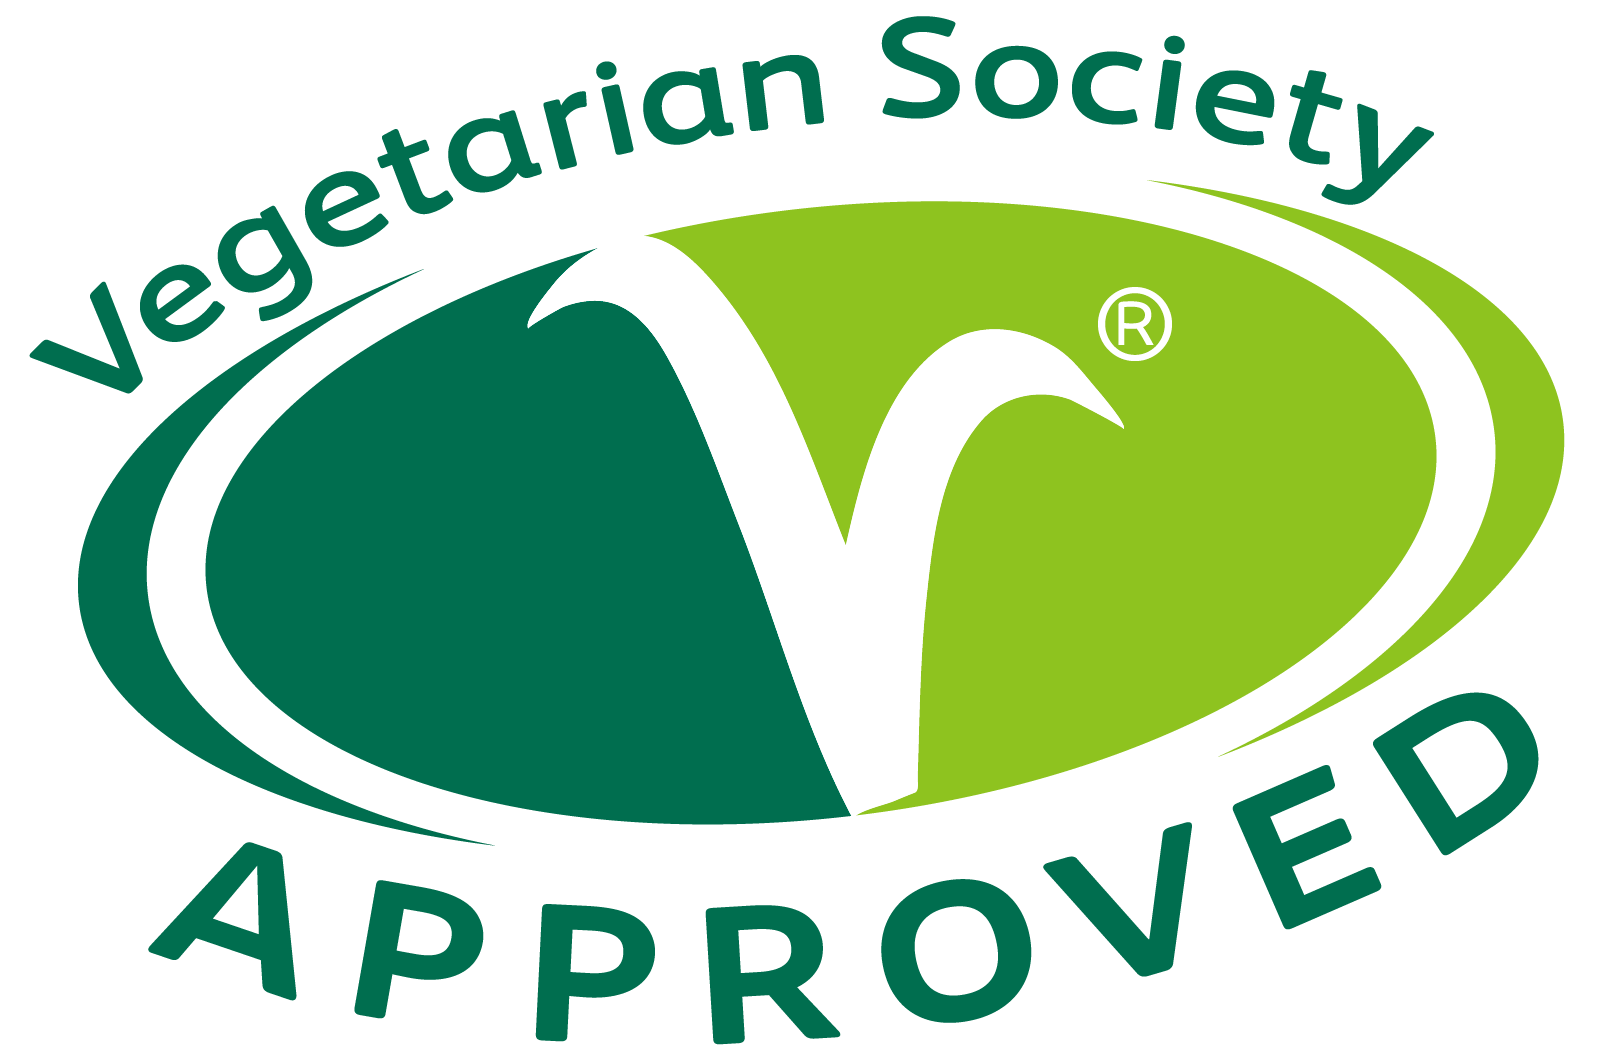 DFC_BIOVXR抗酸植物膠囊_Vegetarian Societ國際素食協會認證 (蛋奶)